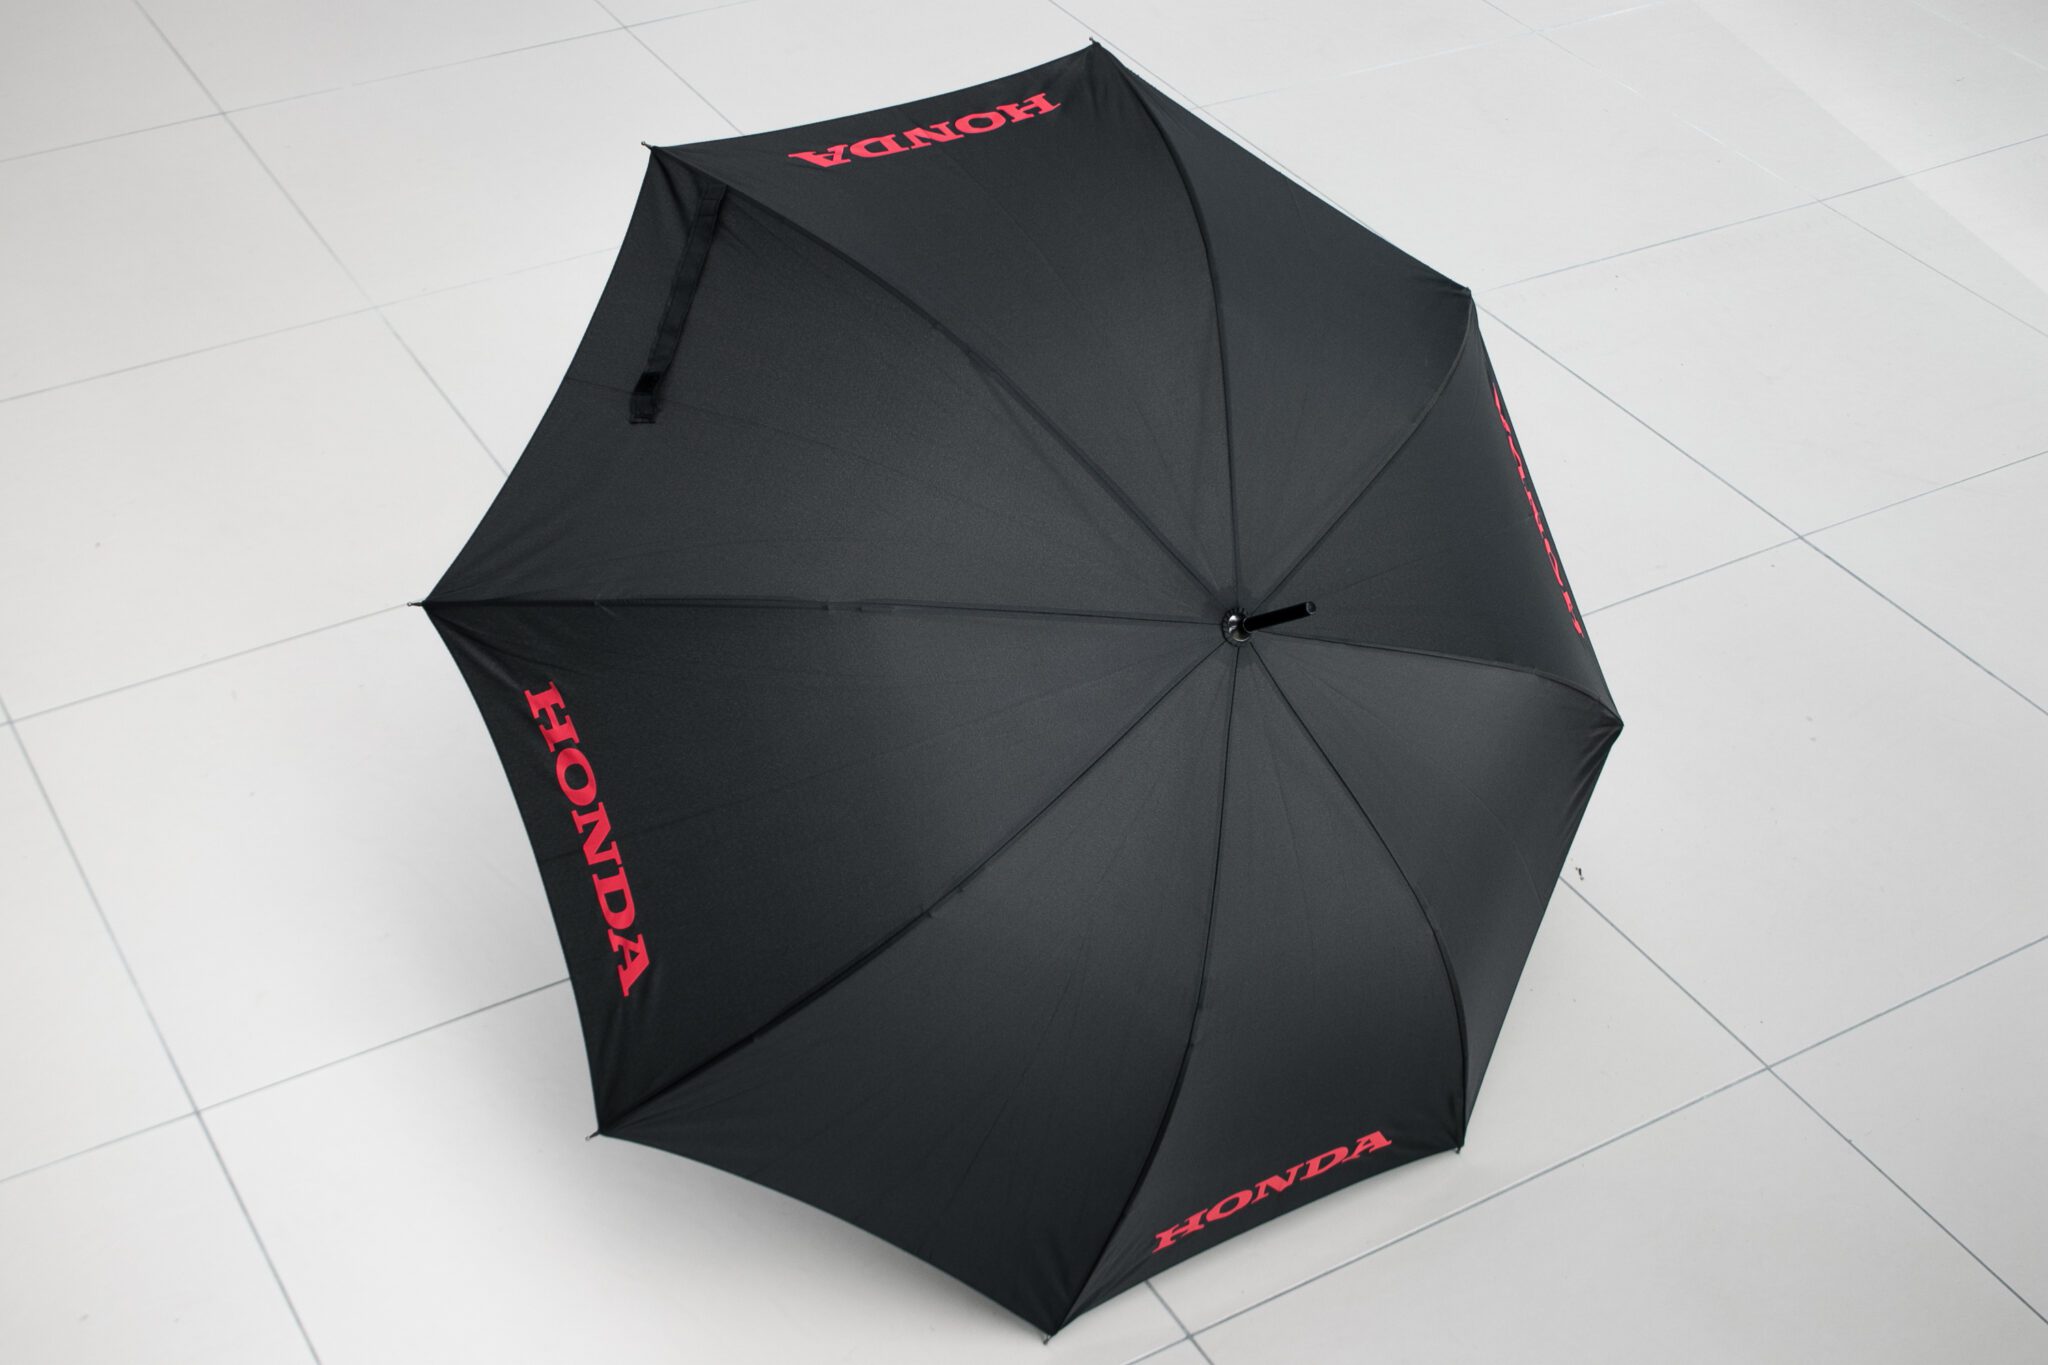 Verfrissend Conjugeren interview Honda Paraplu - Honda Wesselink